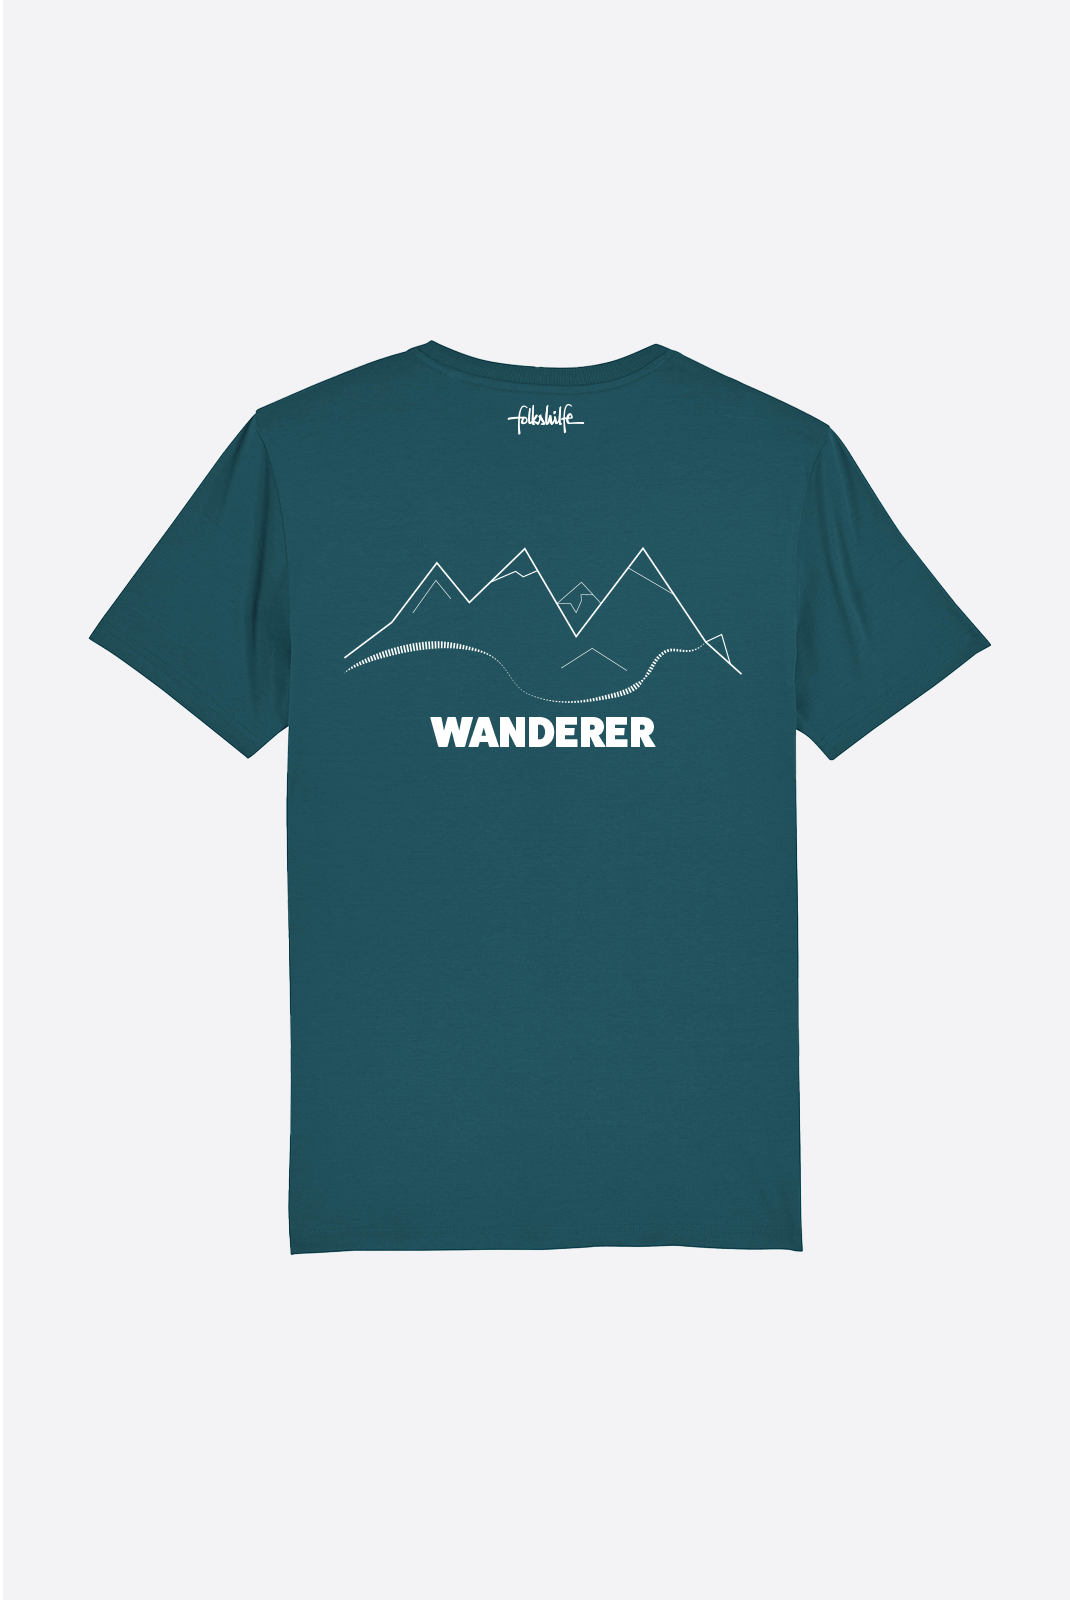 folkshilfe, "WANDERER", Shirt